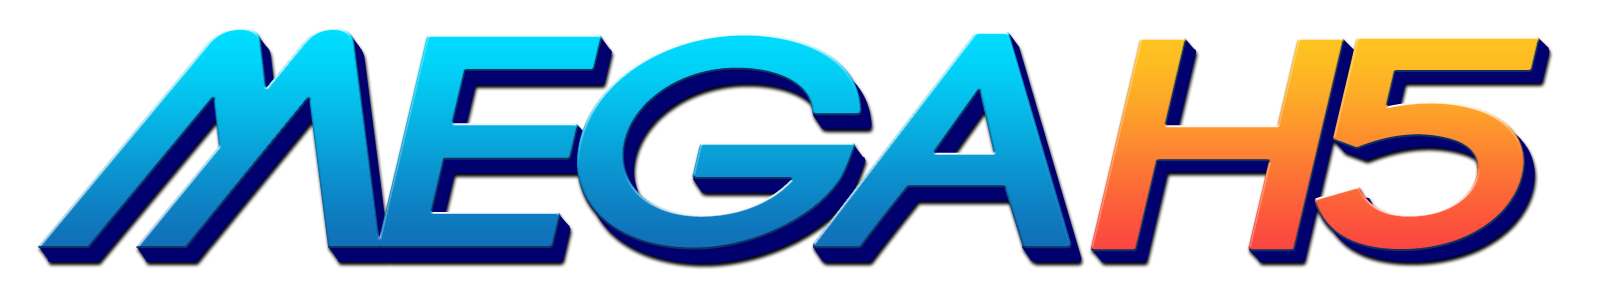 MegaH5 是其中一家列示在樂遊國際GamingSoft供應商數據庫裏的博弈軟件提供商 - 樂遊國際GamingSoft